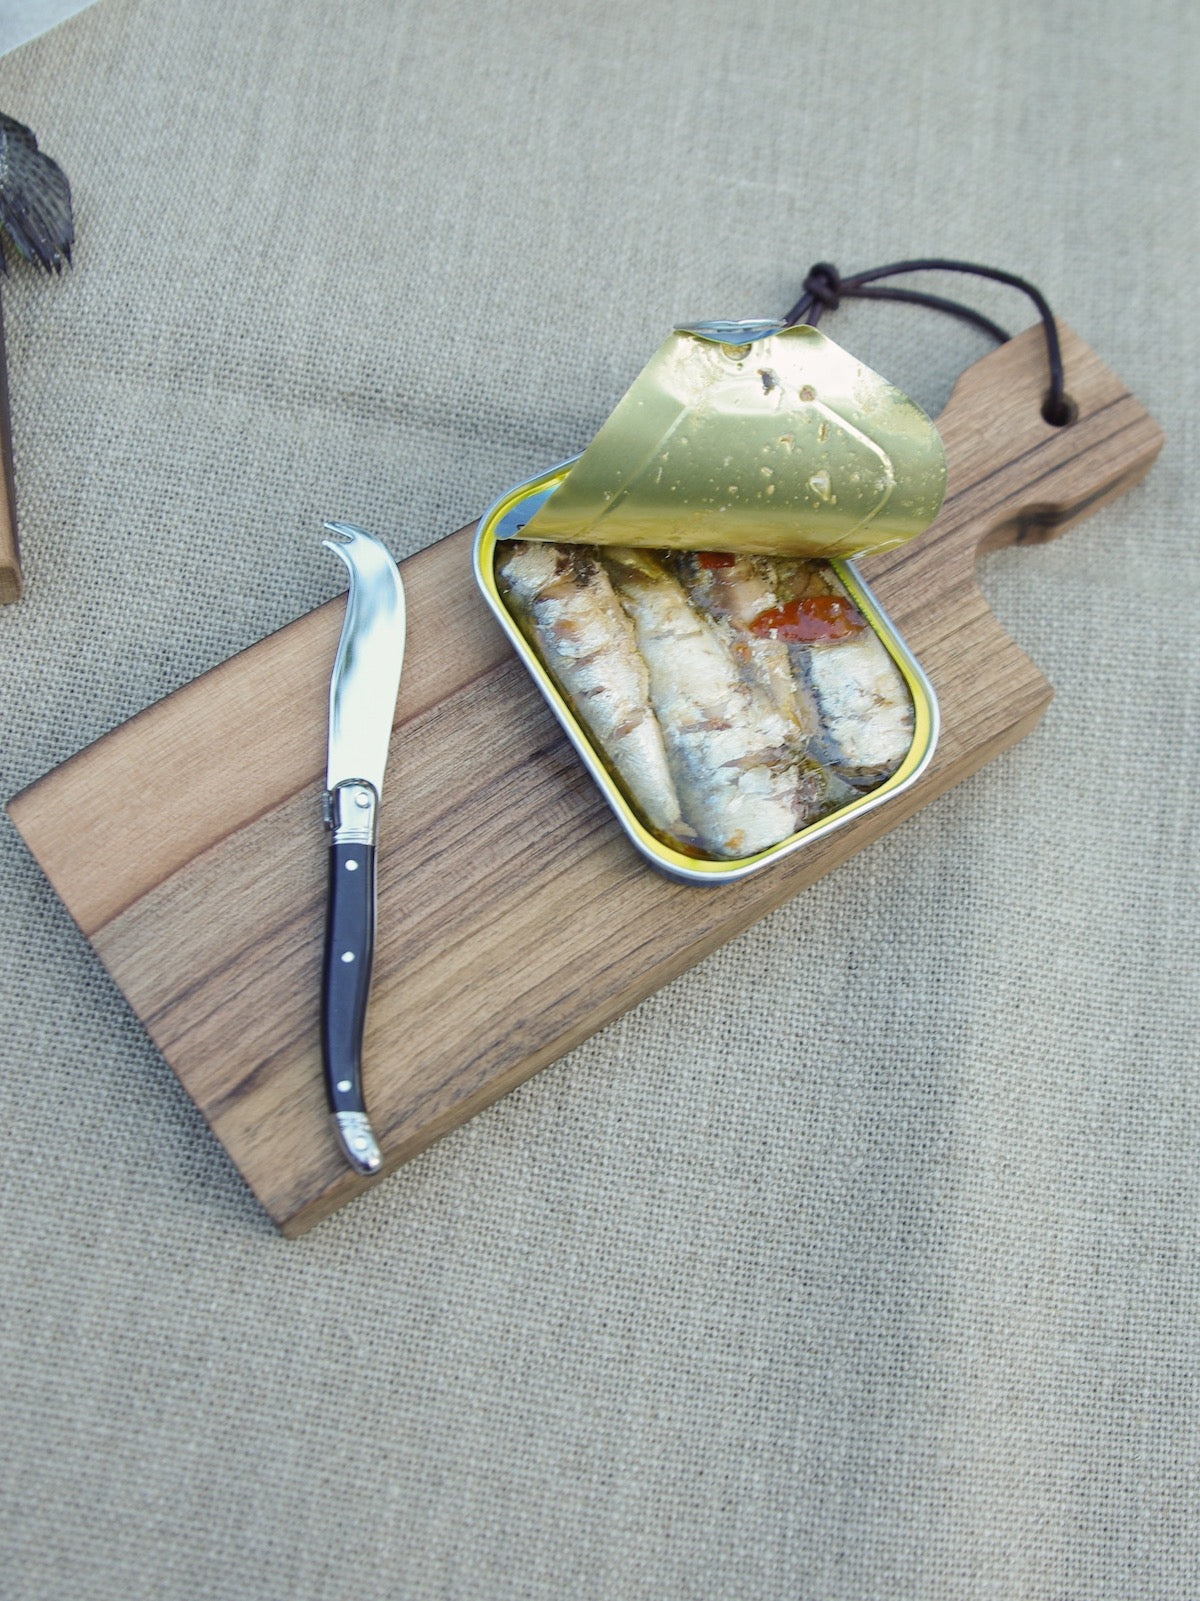 Sardines and knife on small walnut board.